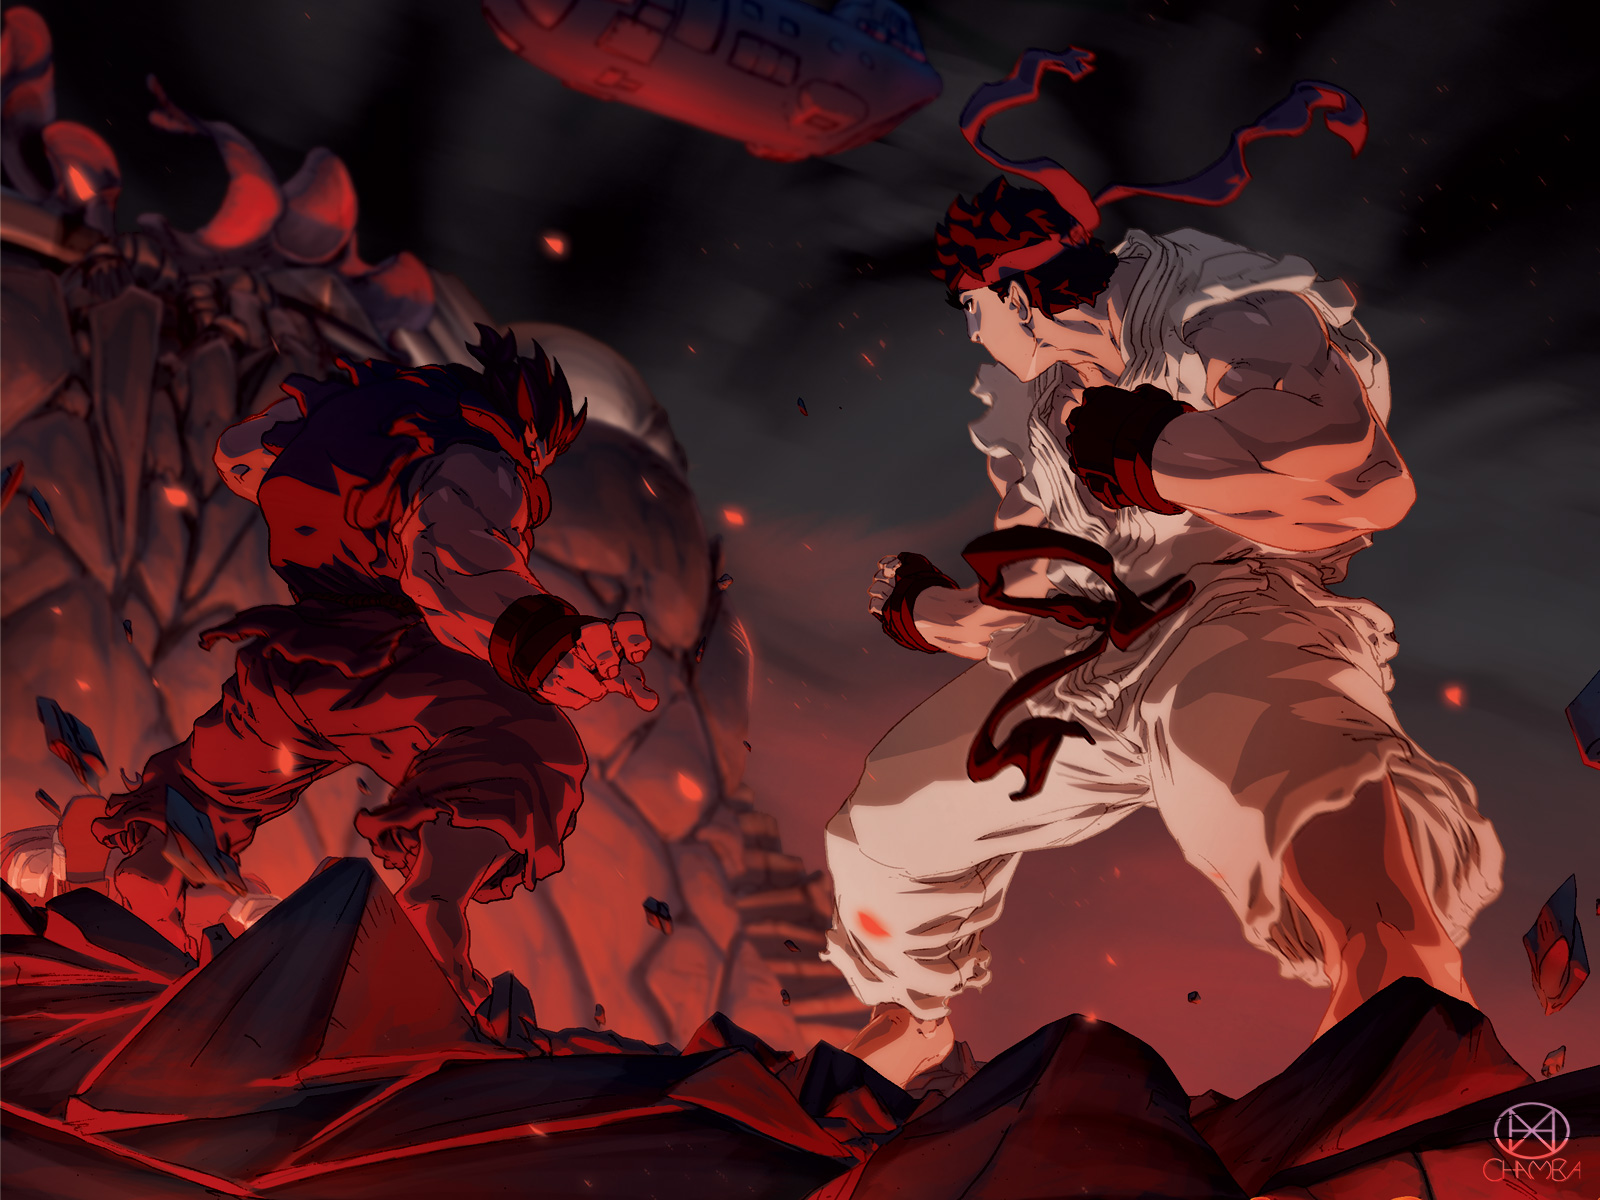 Ryu Wallpapers